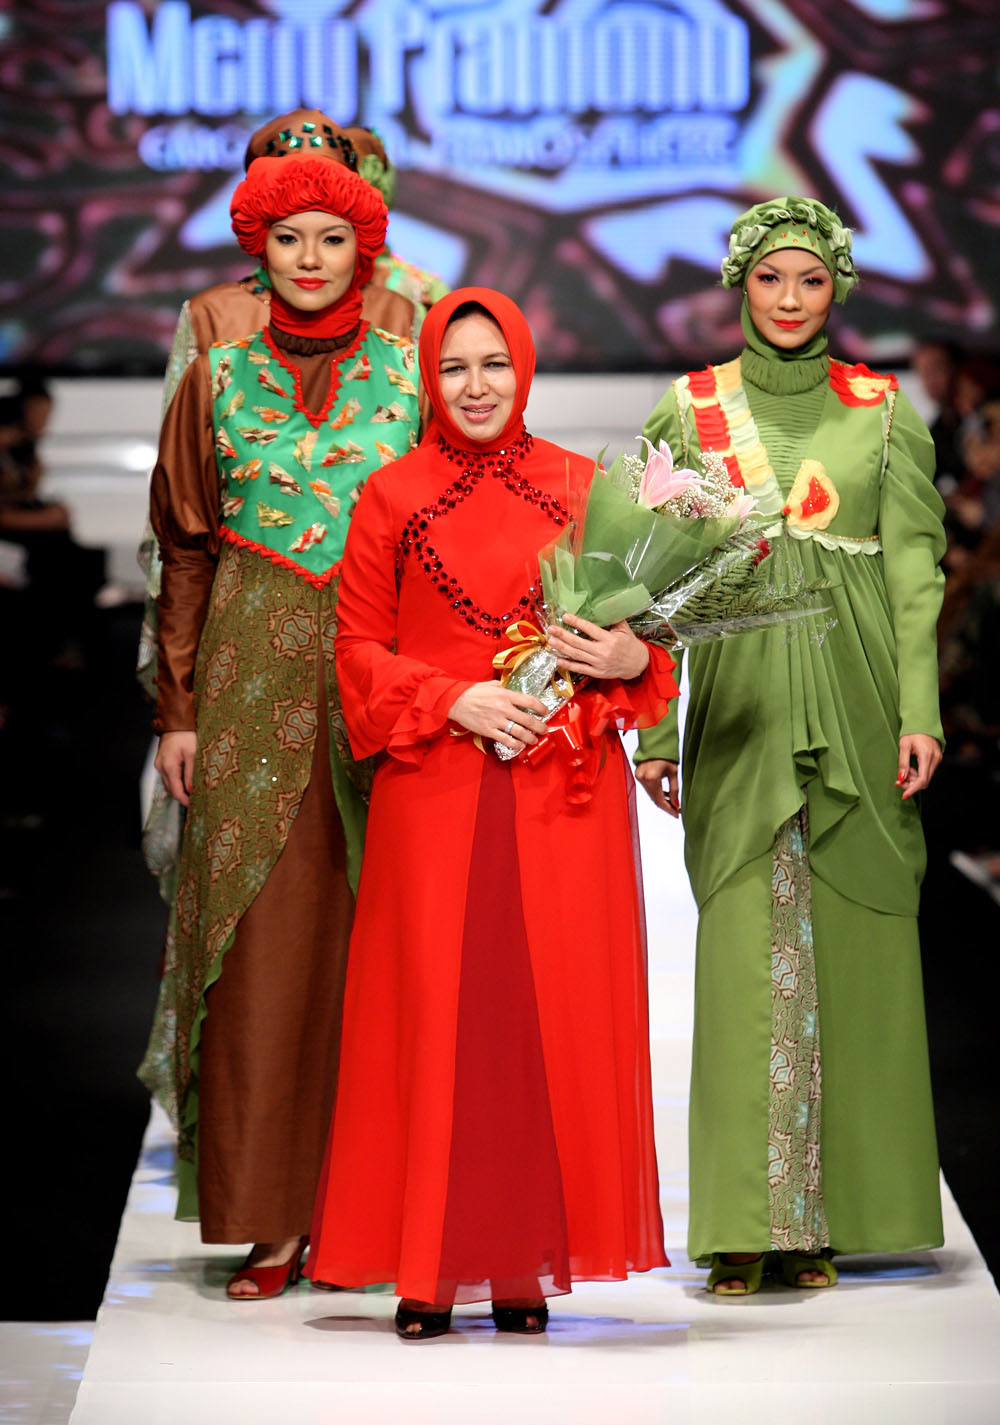 Jakarta Fashion Week 2009: Merry Pramono